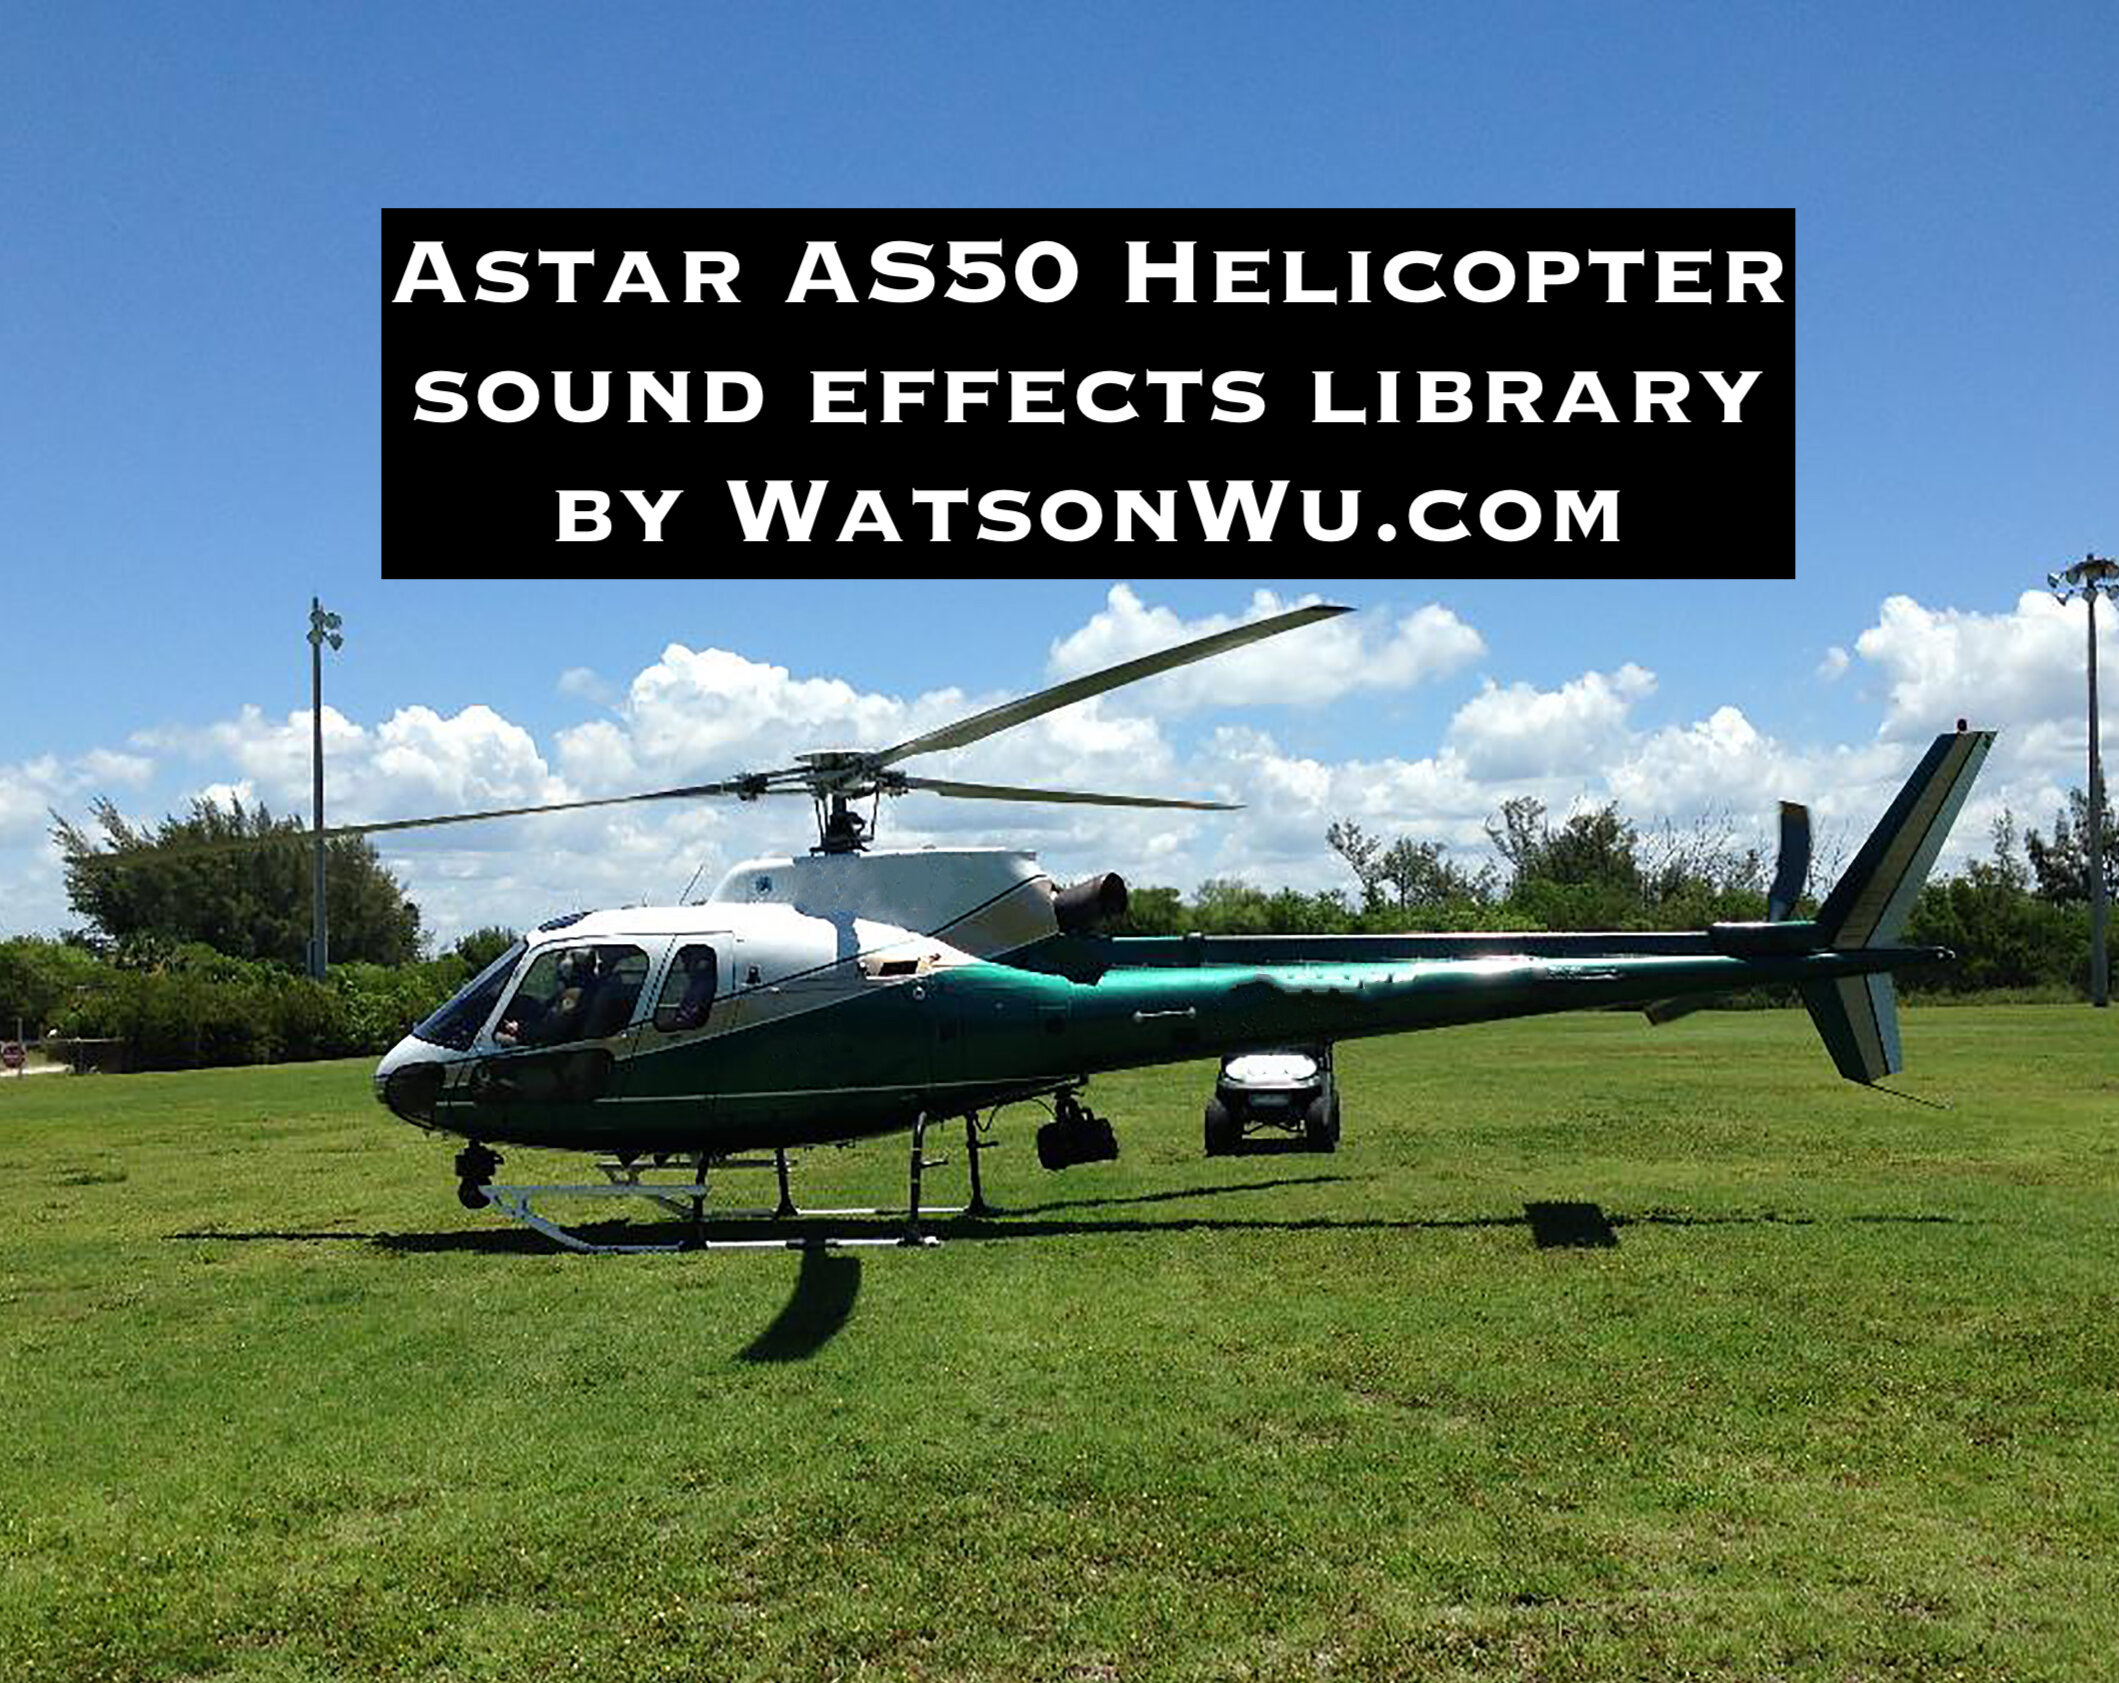 _Helicopter_Astar_AS50_SfxLibrary_WatsonWu.com.jpg